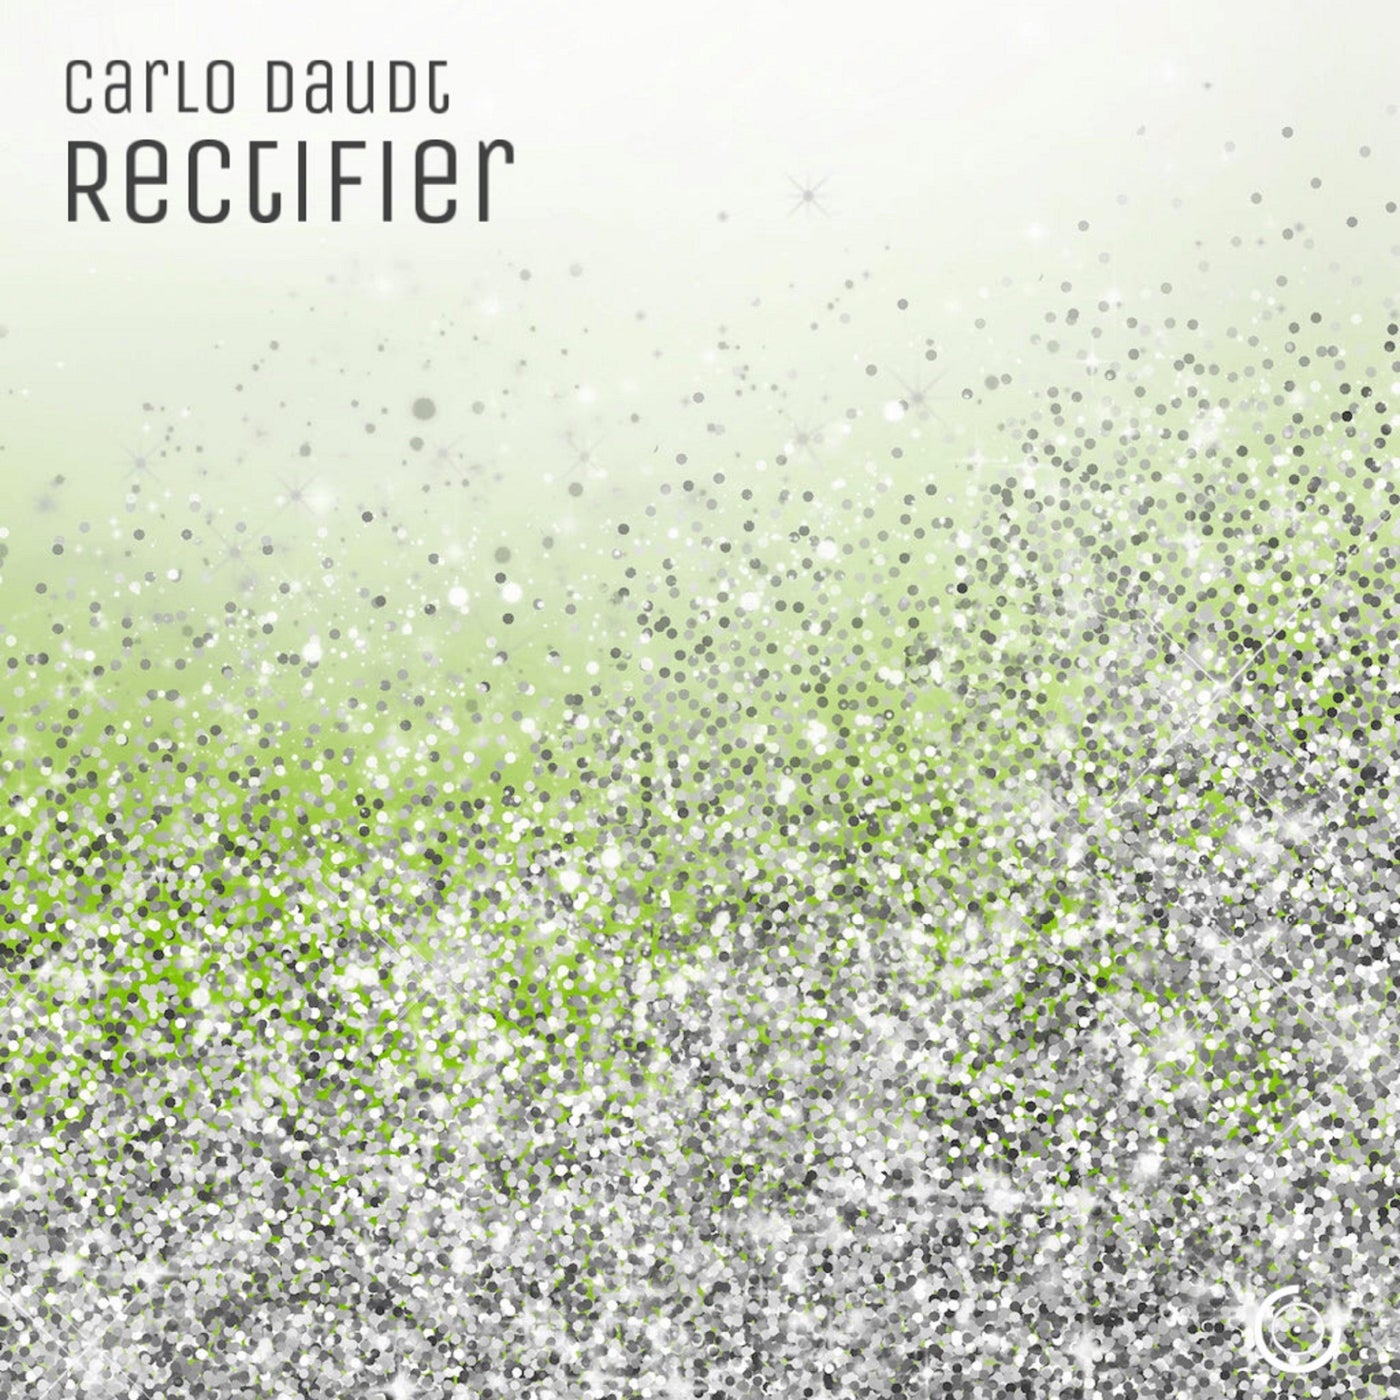 Carlo Daudt - Rectifier [Cause Org Records]